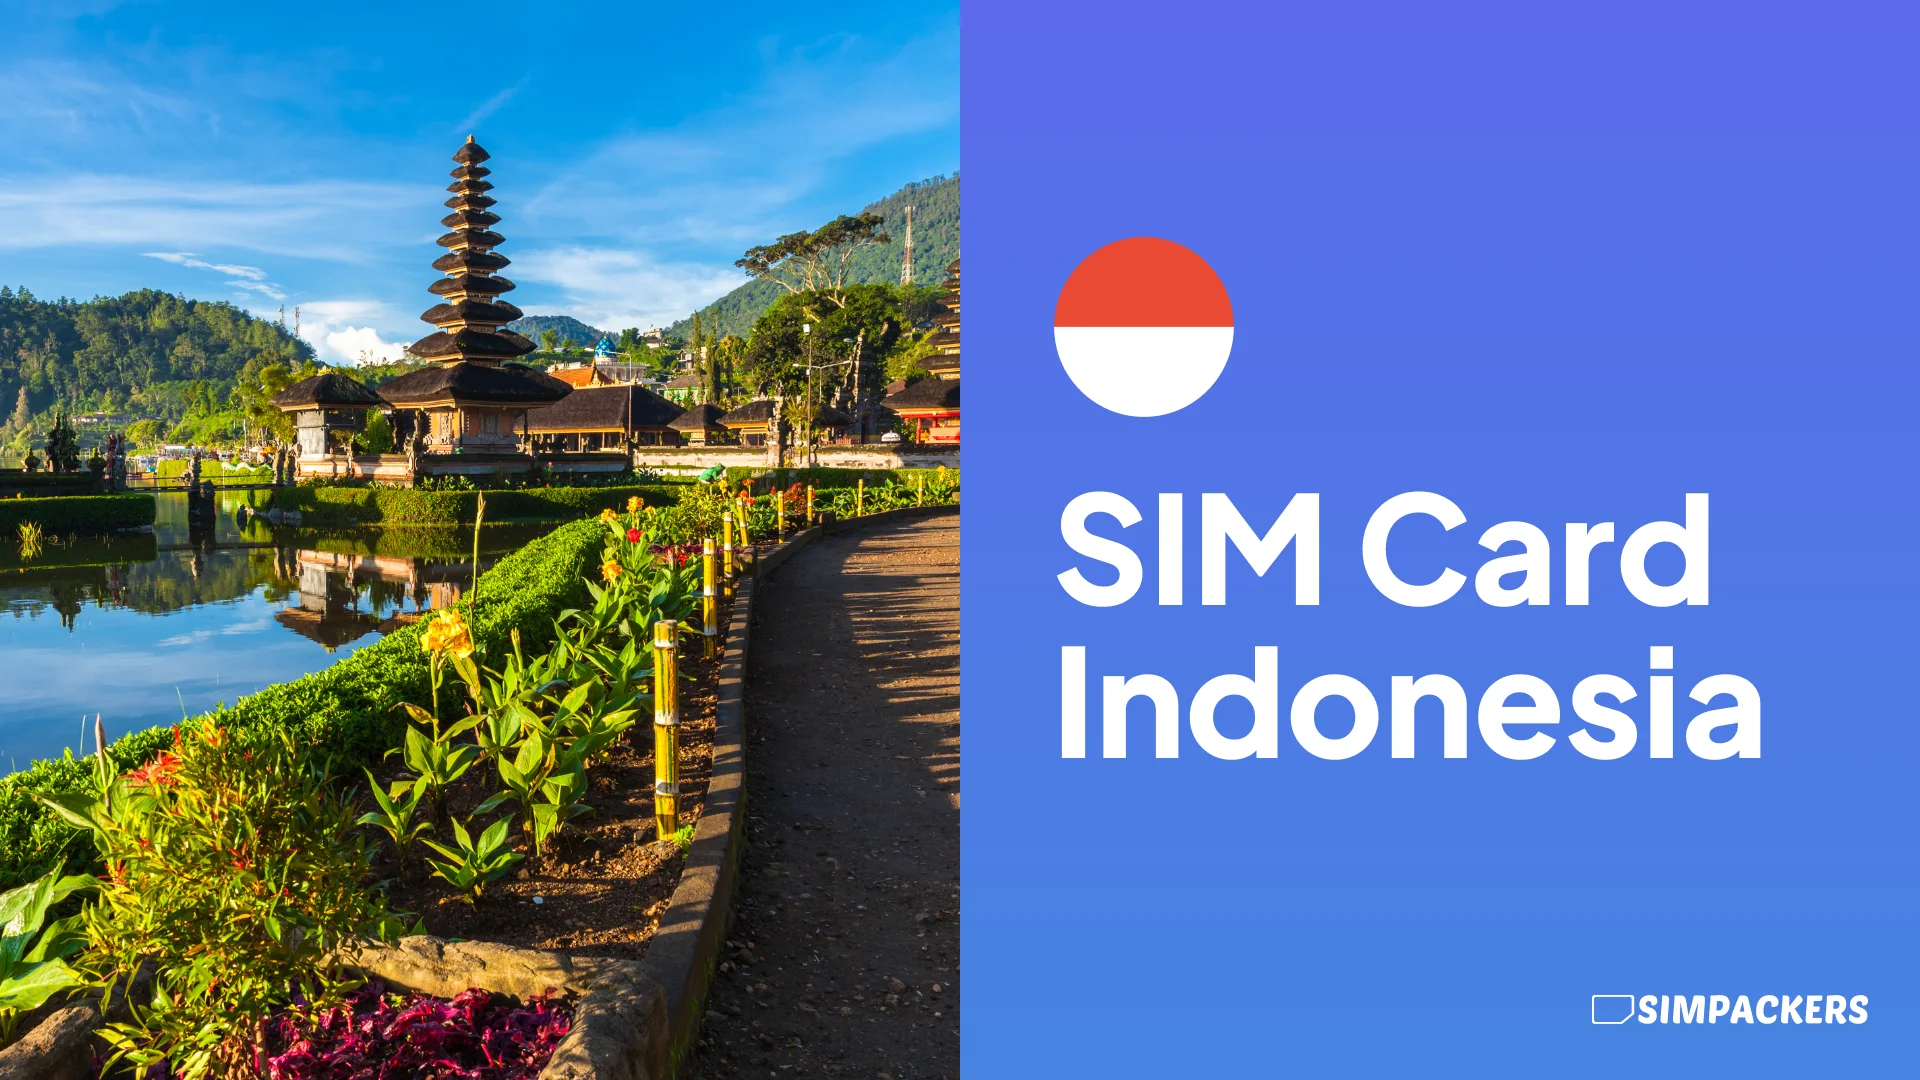 EN/FEATURED_IMAGES/sim-card-indonesia.webp